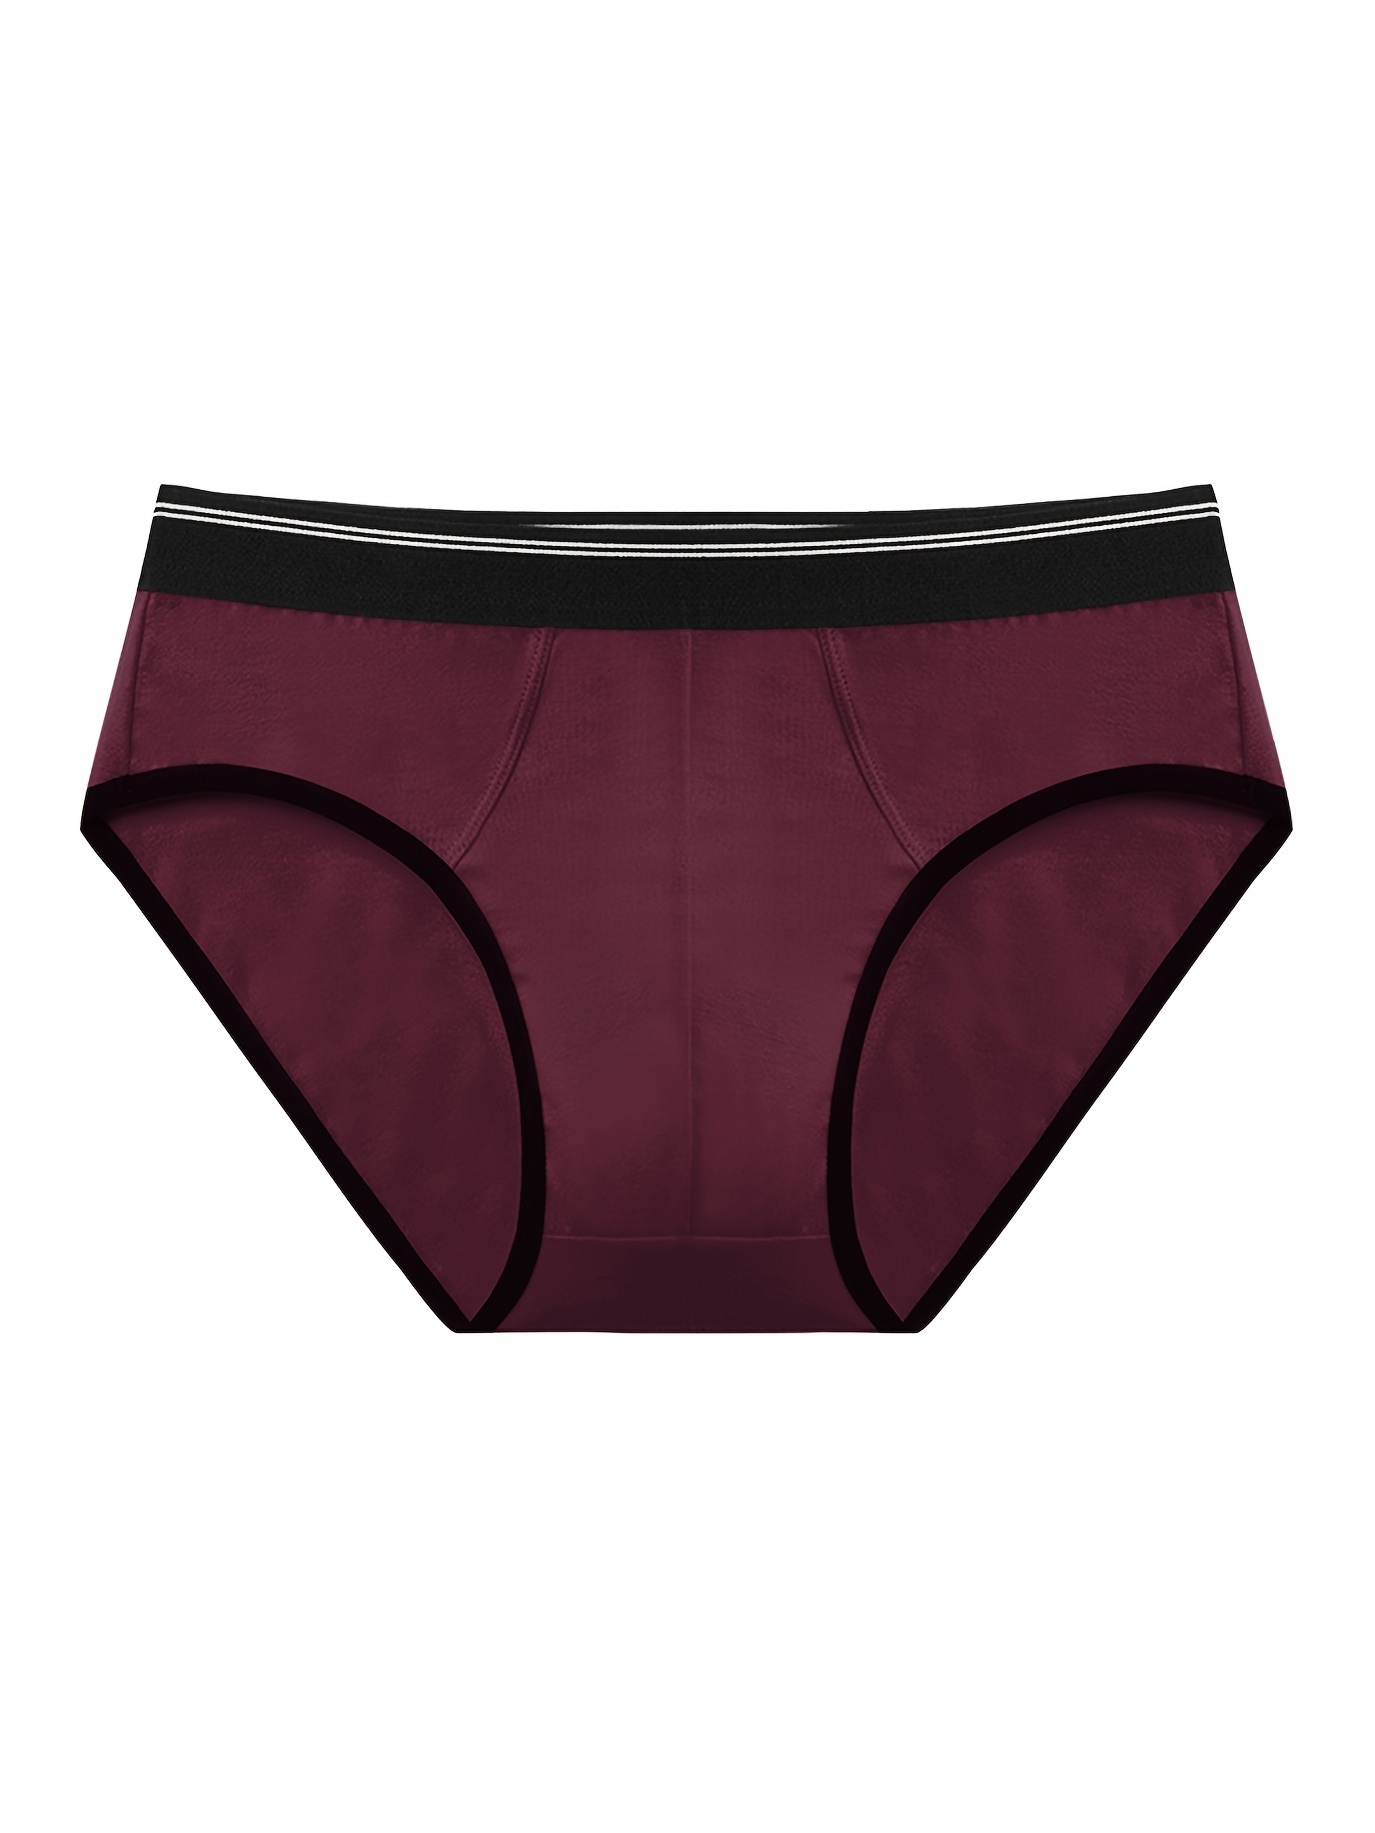 Men Underwear 2xist Briefs Men's Breathable Sports Underpants